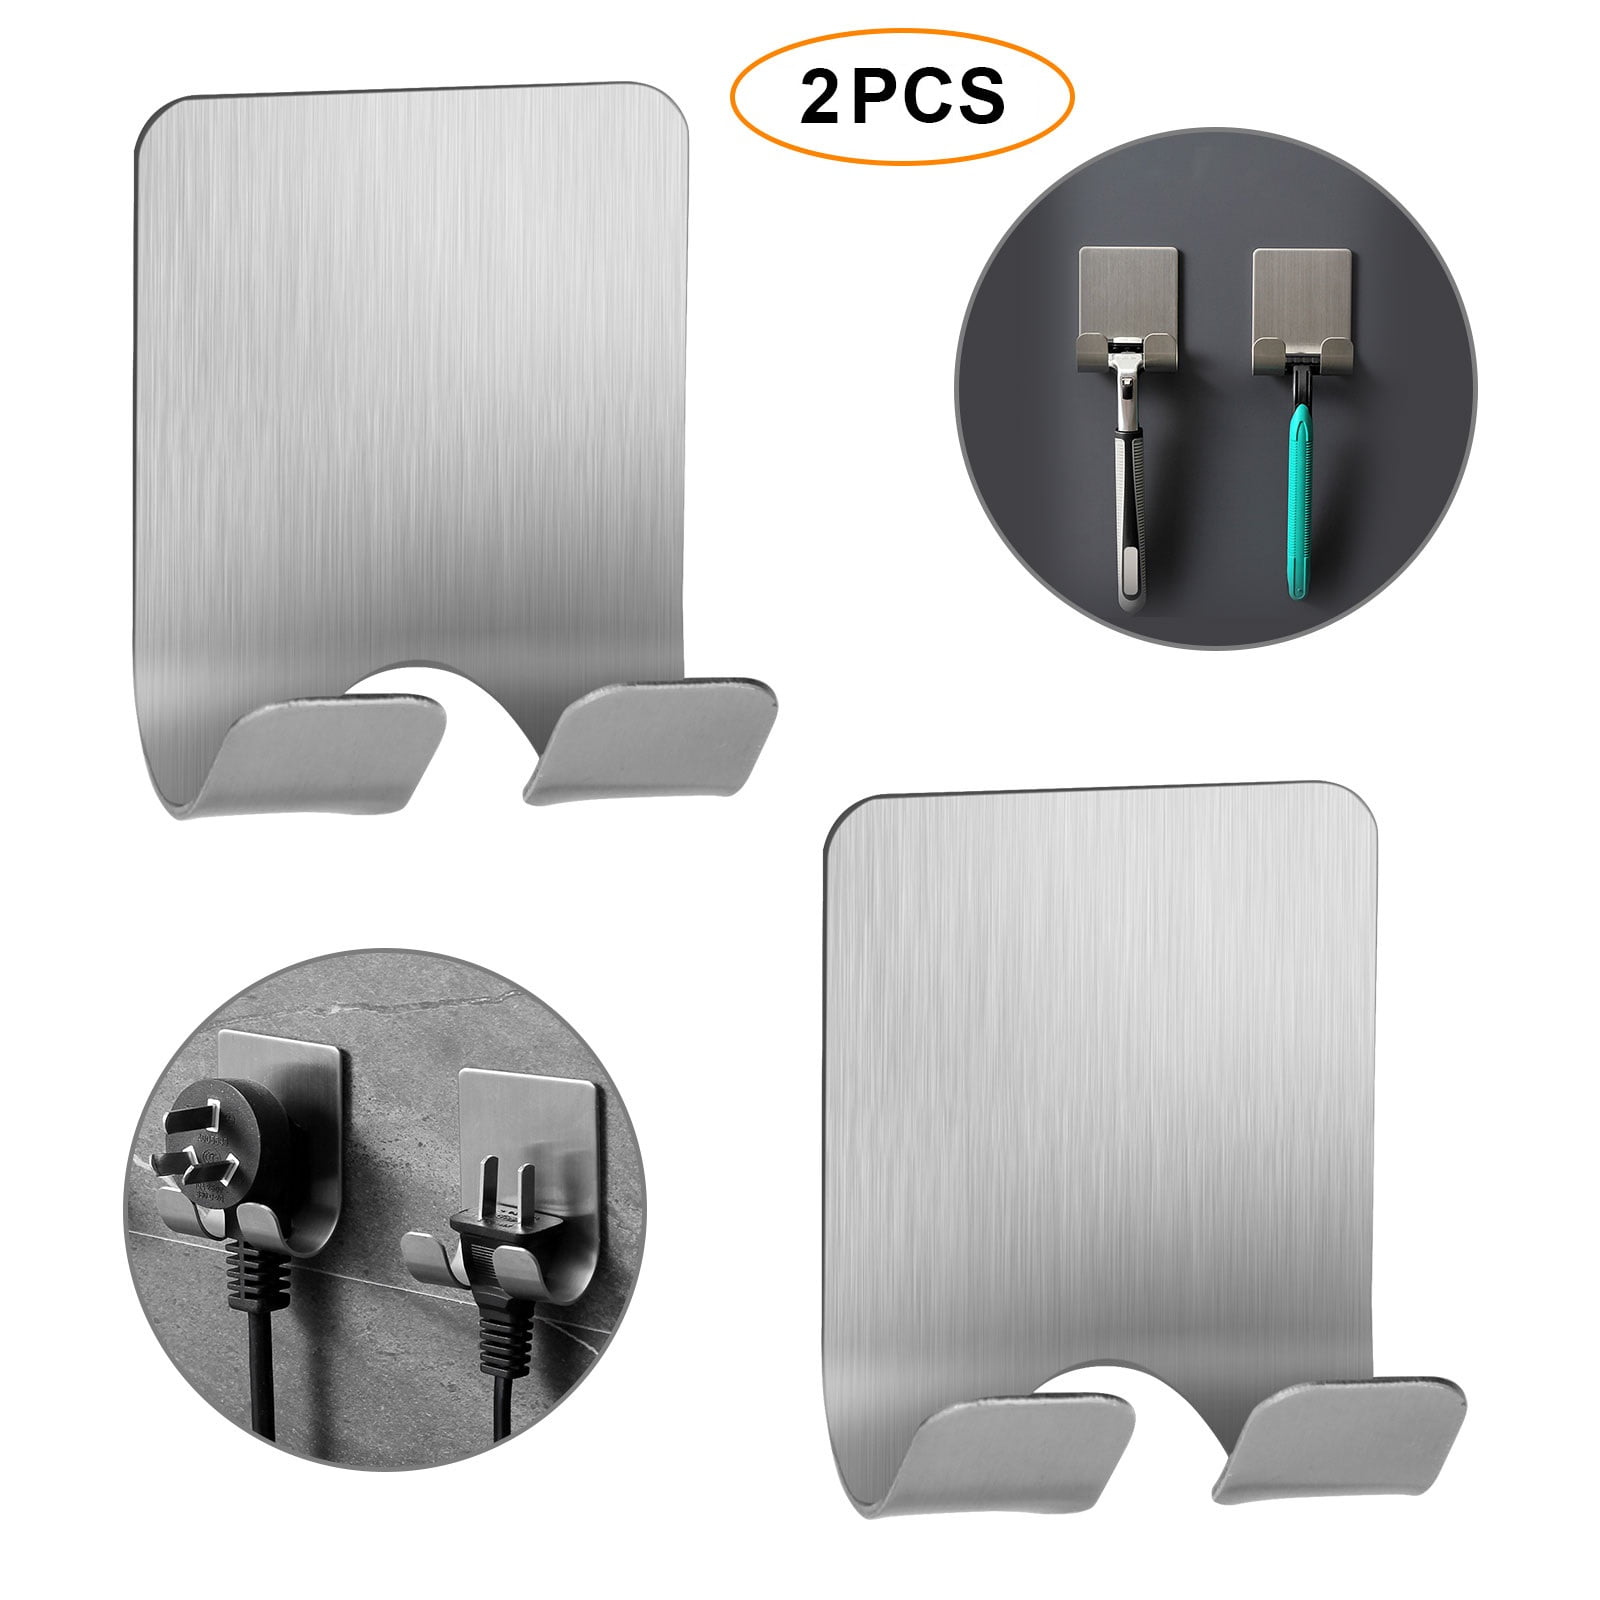 KOFANI Razor Holder for Shower Wall, Heavy Duty Stainless Steel Shower  Razor Holder for Bathroom Kitchen, Waterproof Adhesive Razor Holder to Hang